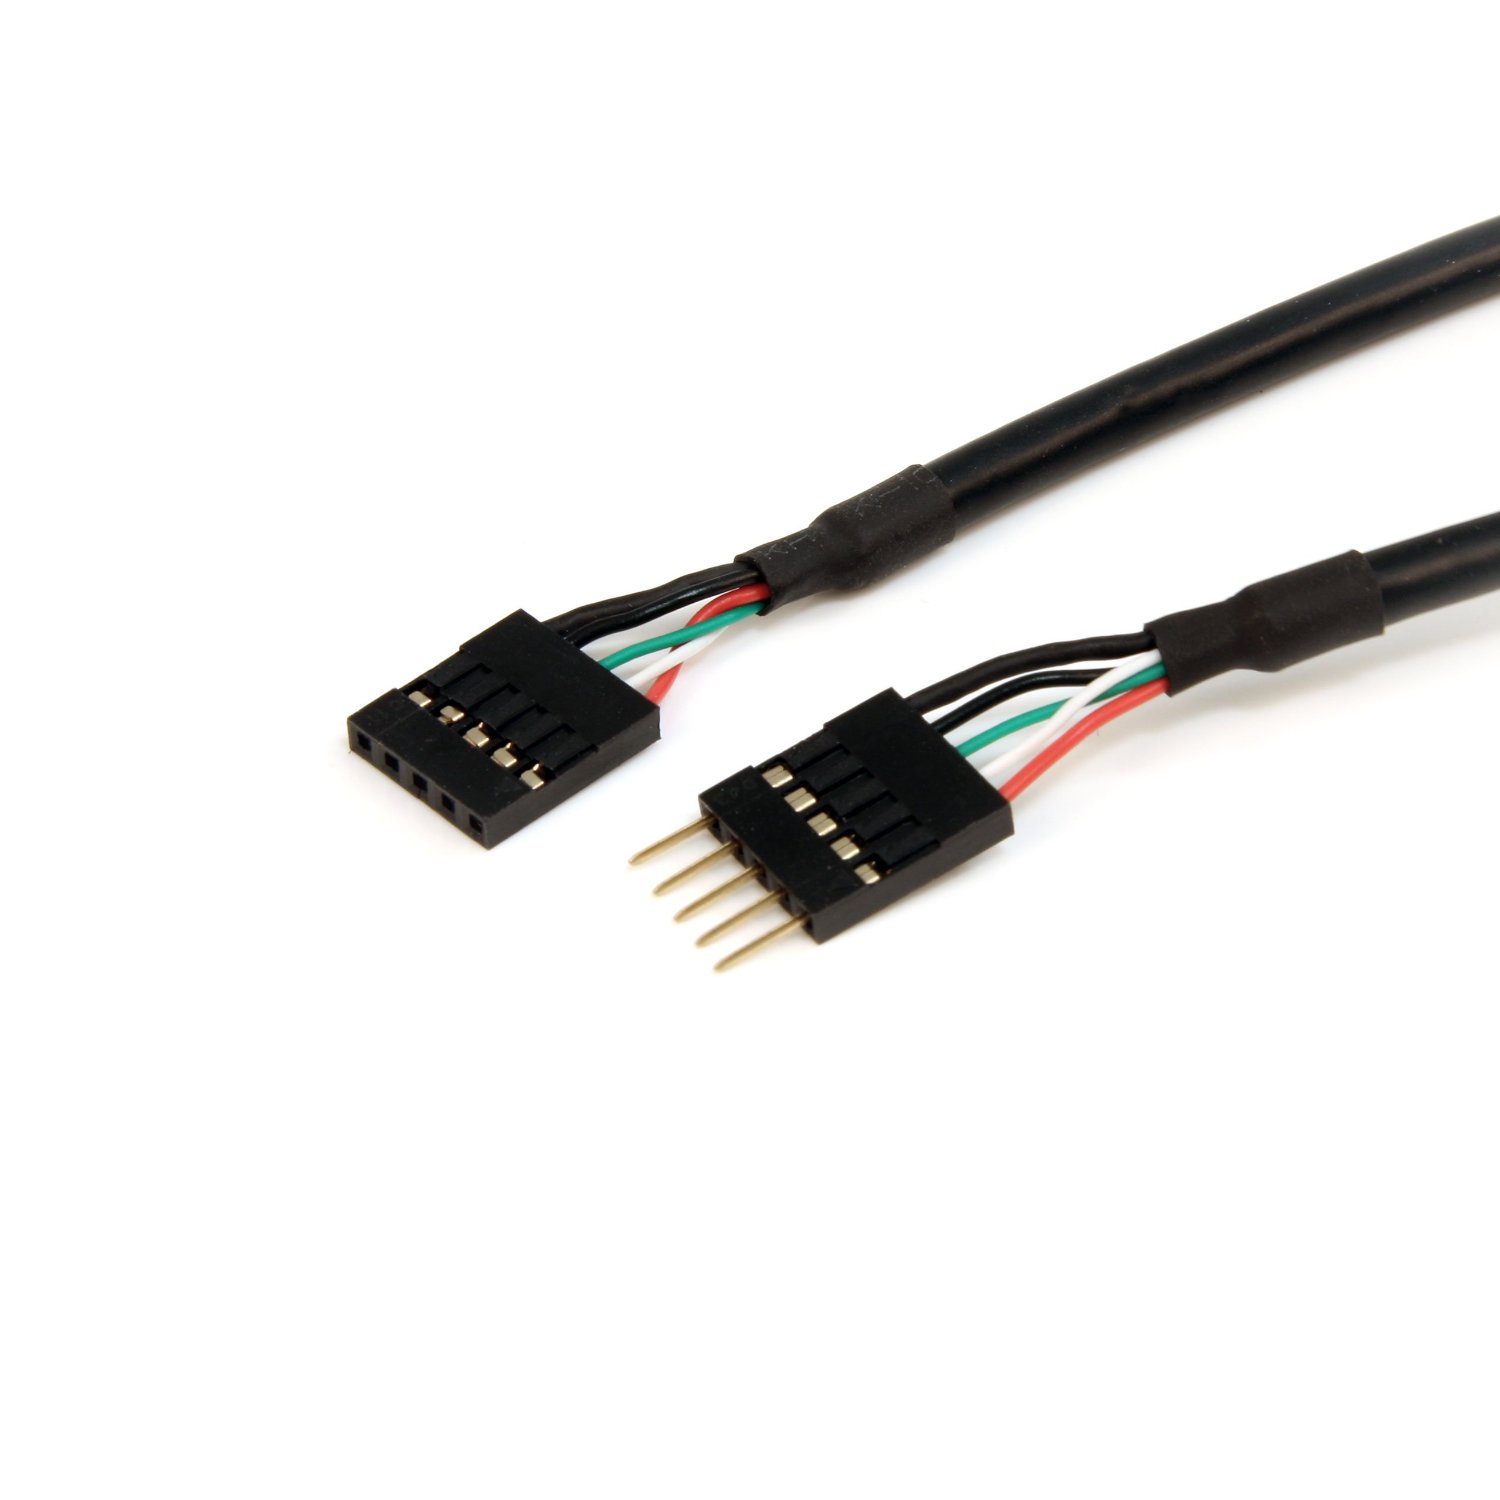 Cable USB Interne 5 pins M/F - USBINT5PINMF - Connectique PC